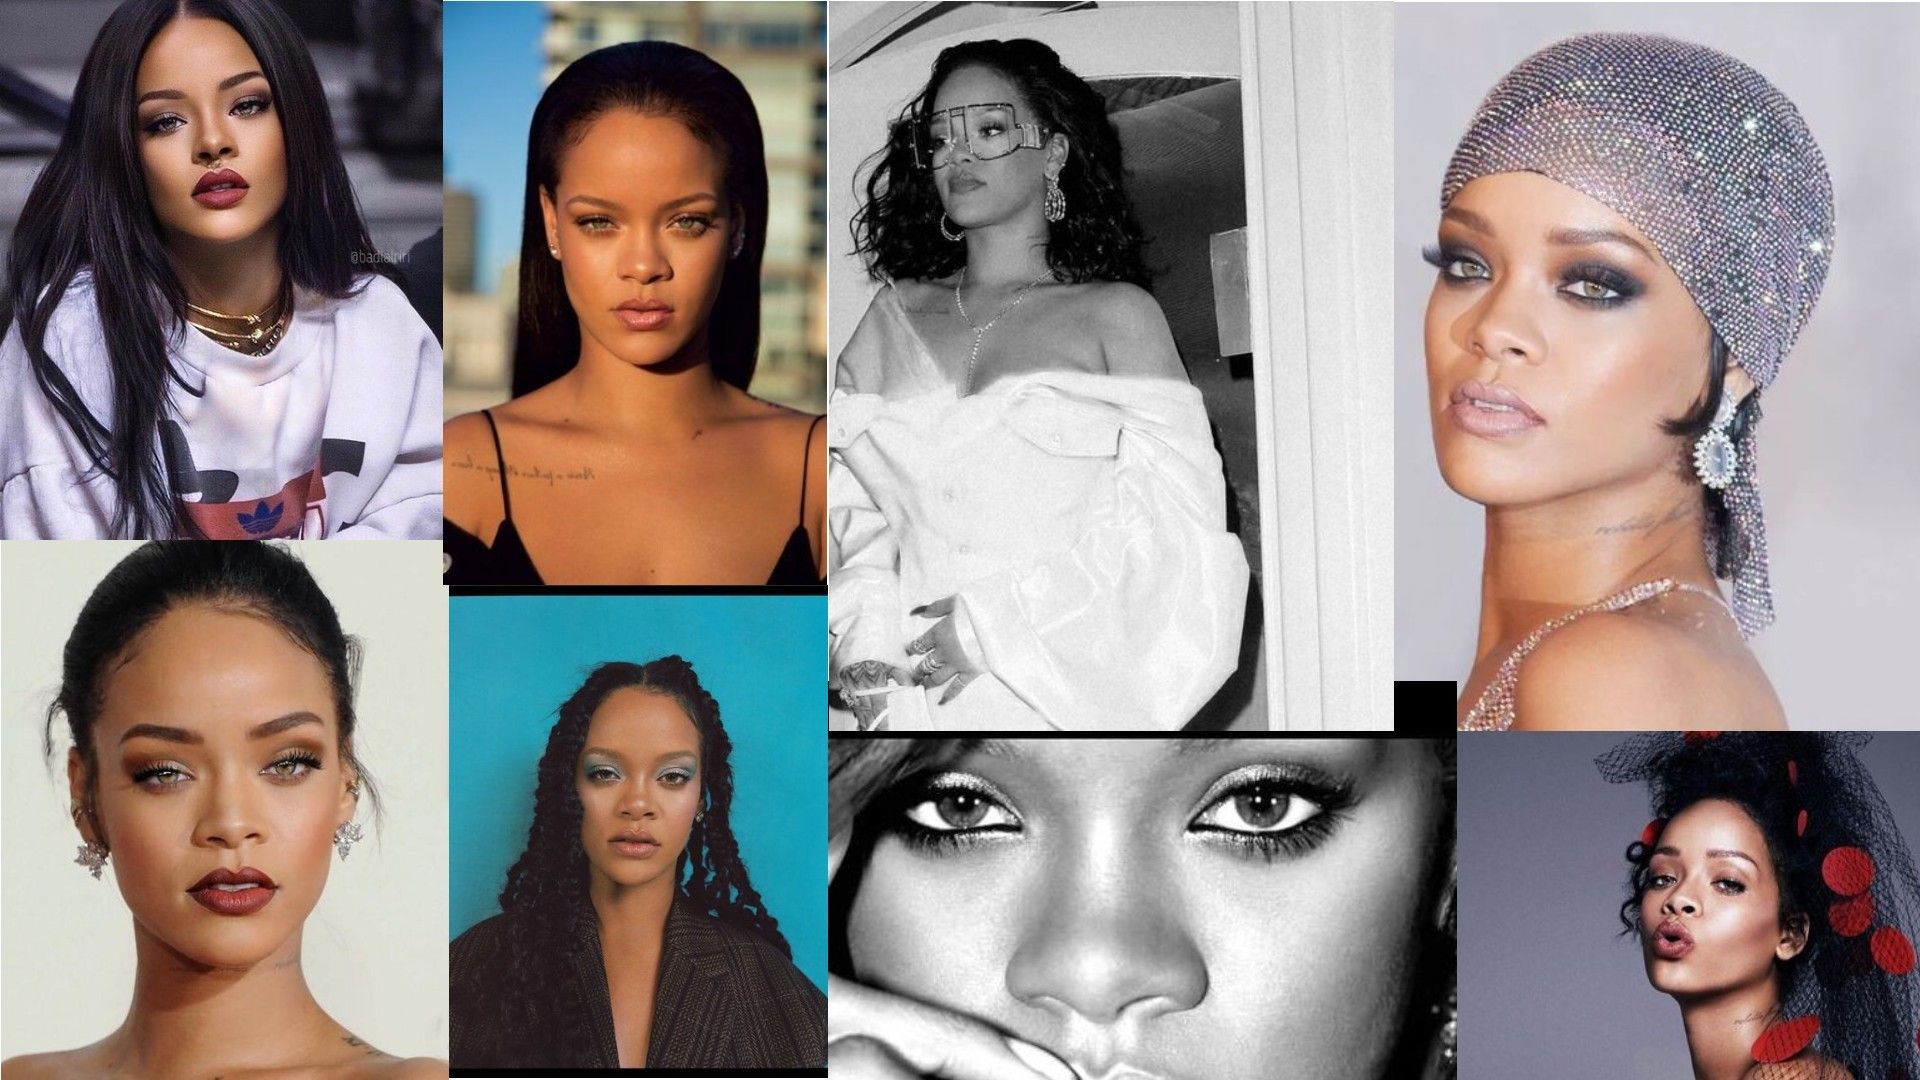  Rihanna Hintergrundbild 1920x1080. Rihanna laptop wallpaper. Rihanna, Bad and boujee outfits, Laptop wallpaper desktop wallpaper